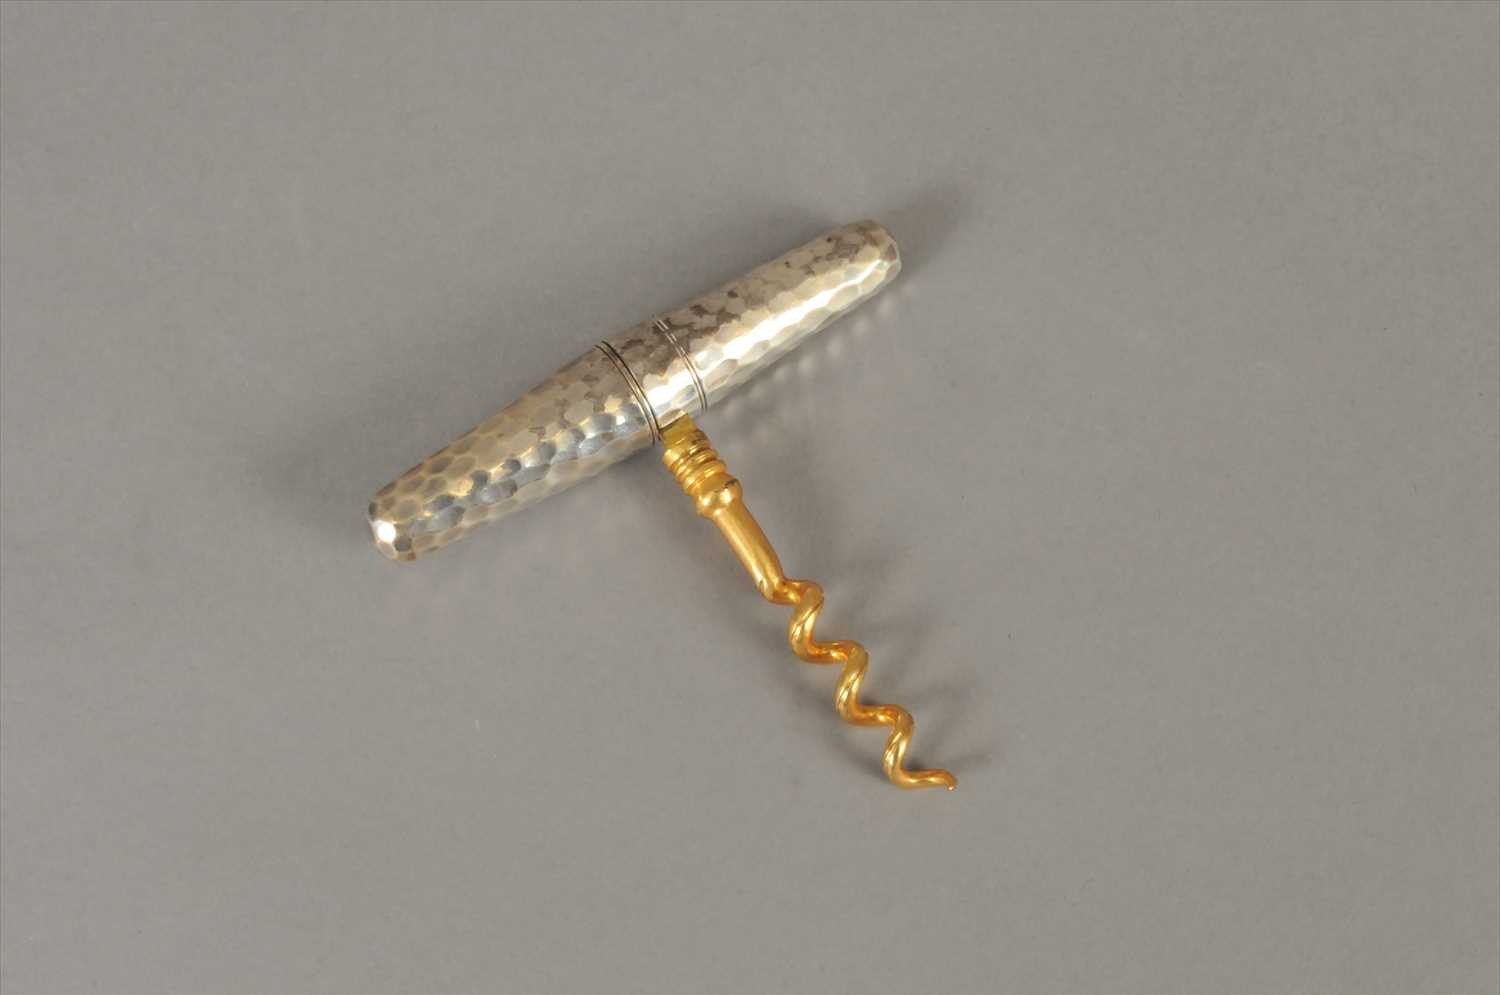 Lot 58 - A silver mounted folding travel cork screw